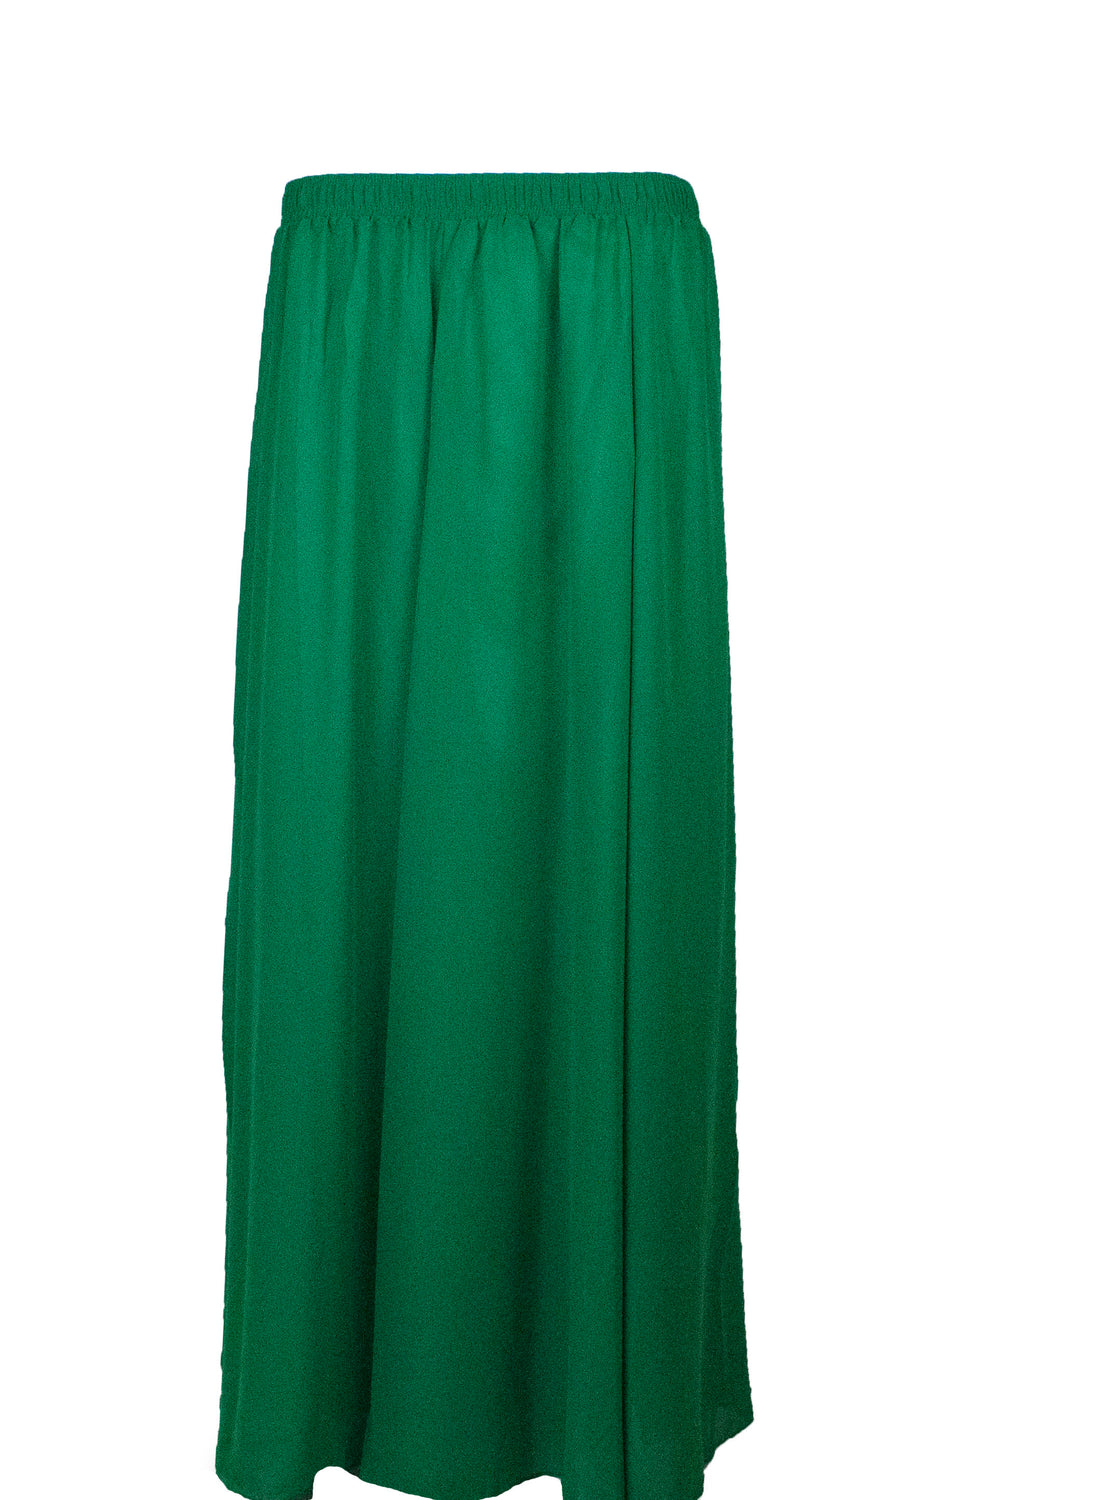 green chiffon skirt 